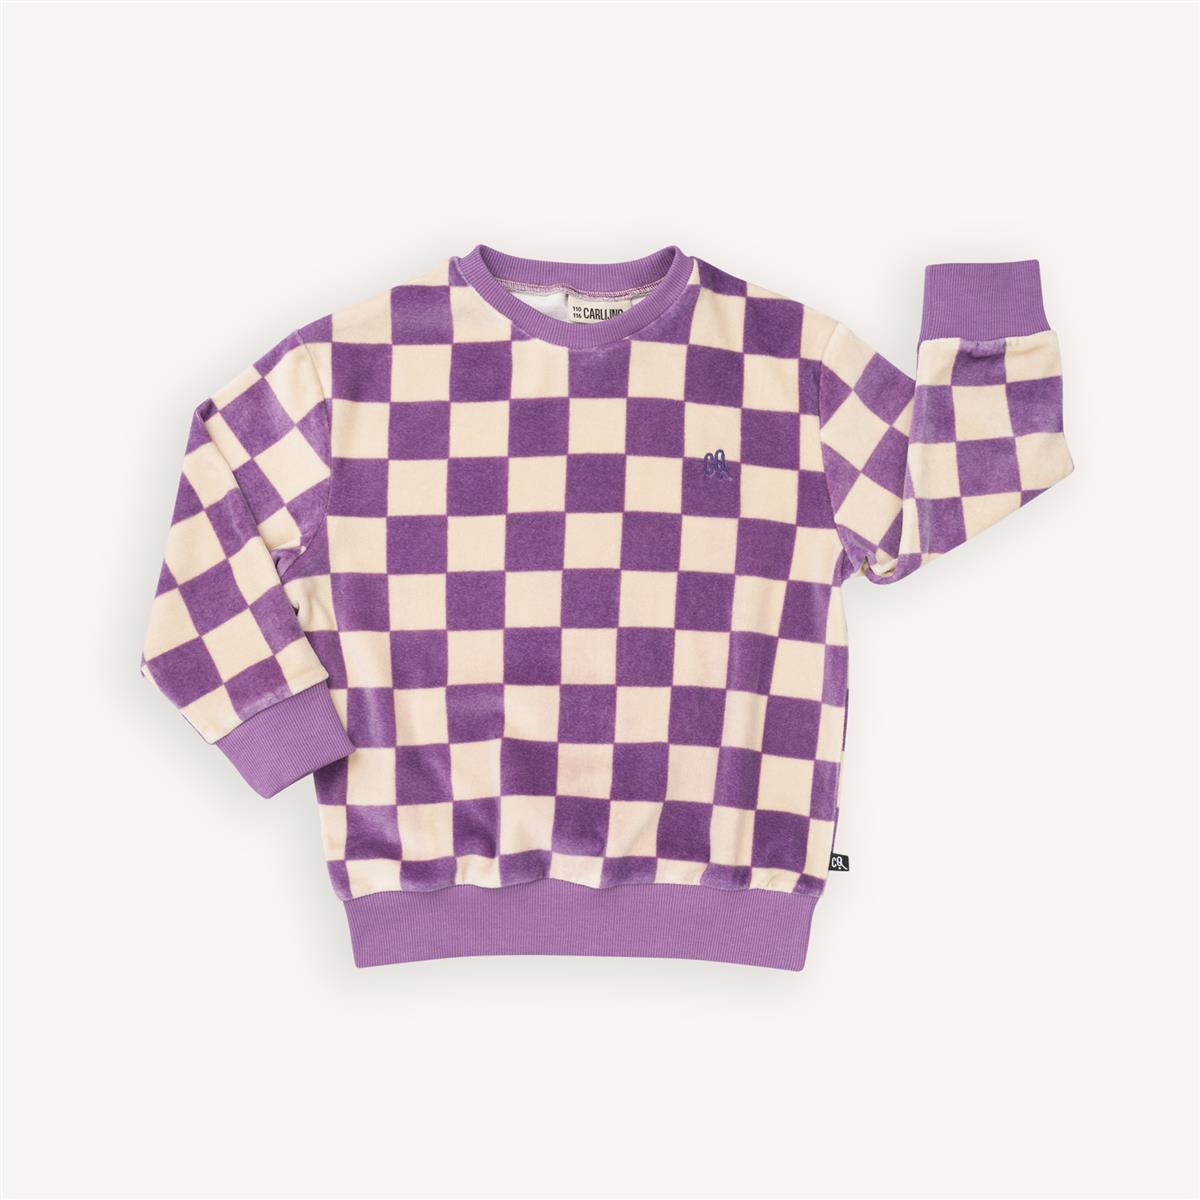 CARLIJNQ - Checkers - Sweater (Velvet)